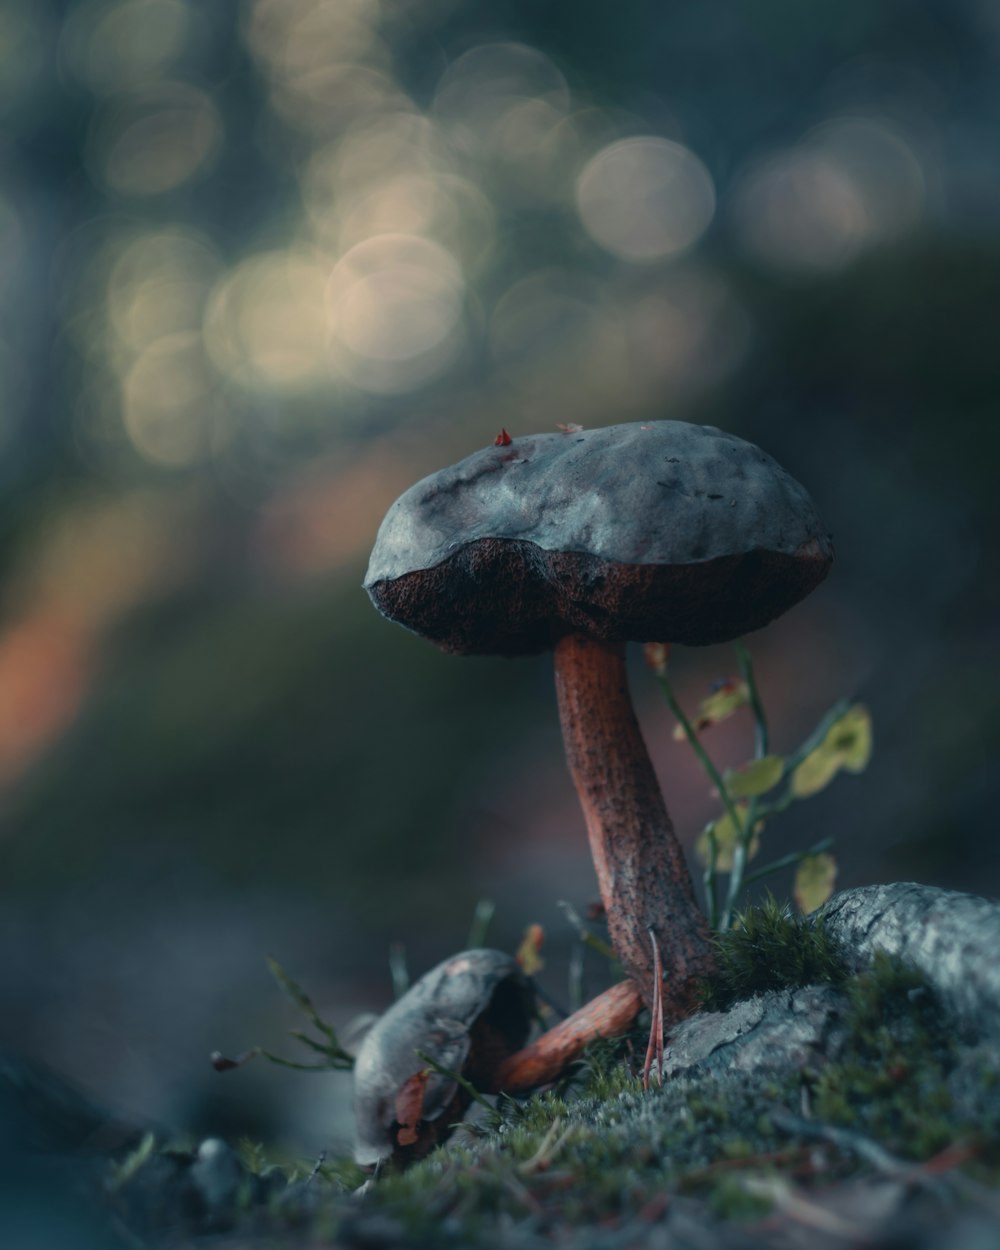 a close up of a mushroom on a rock